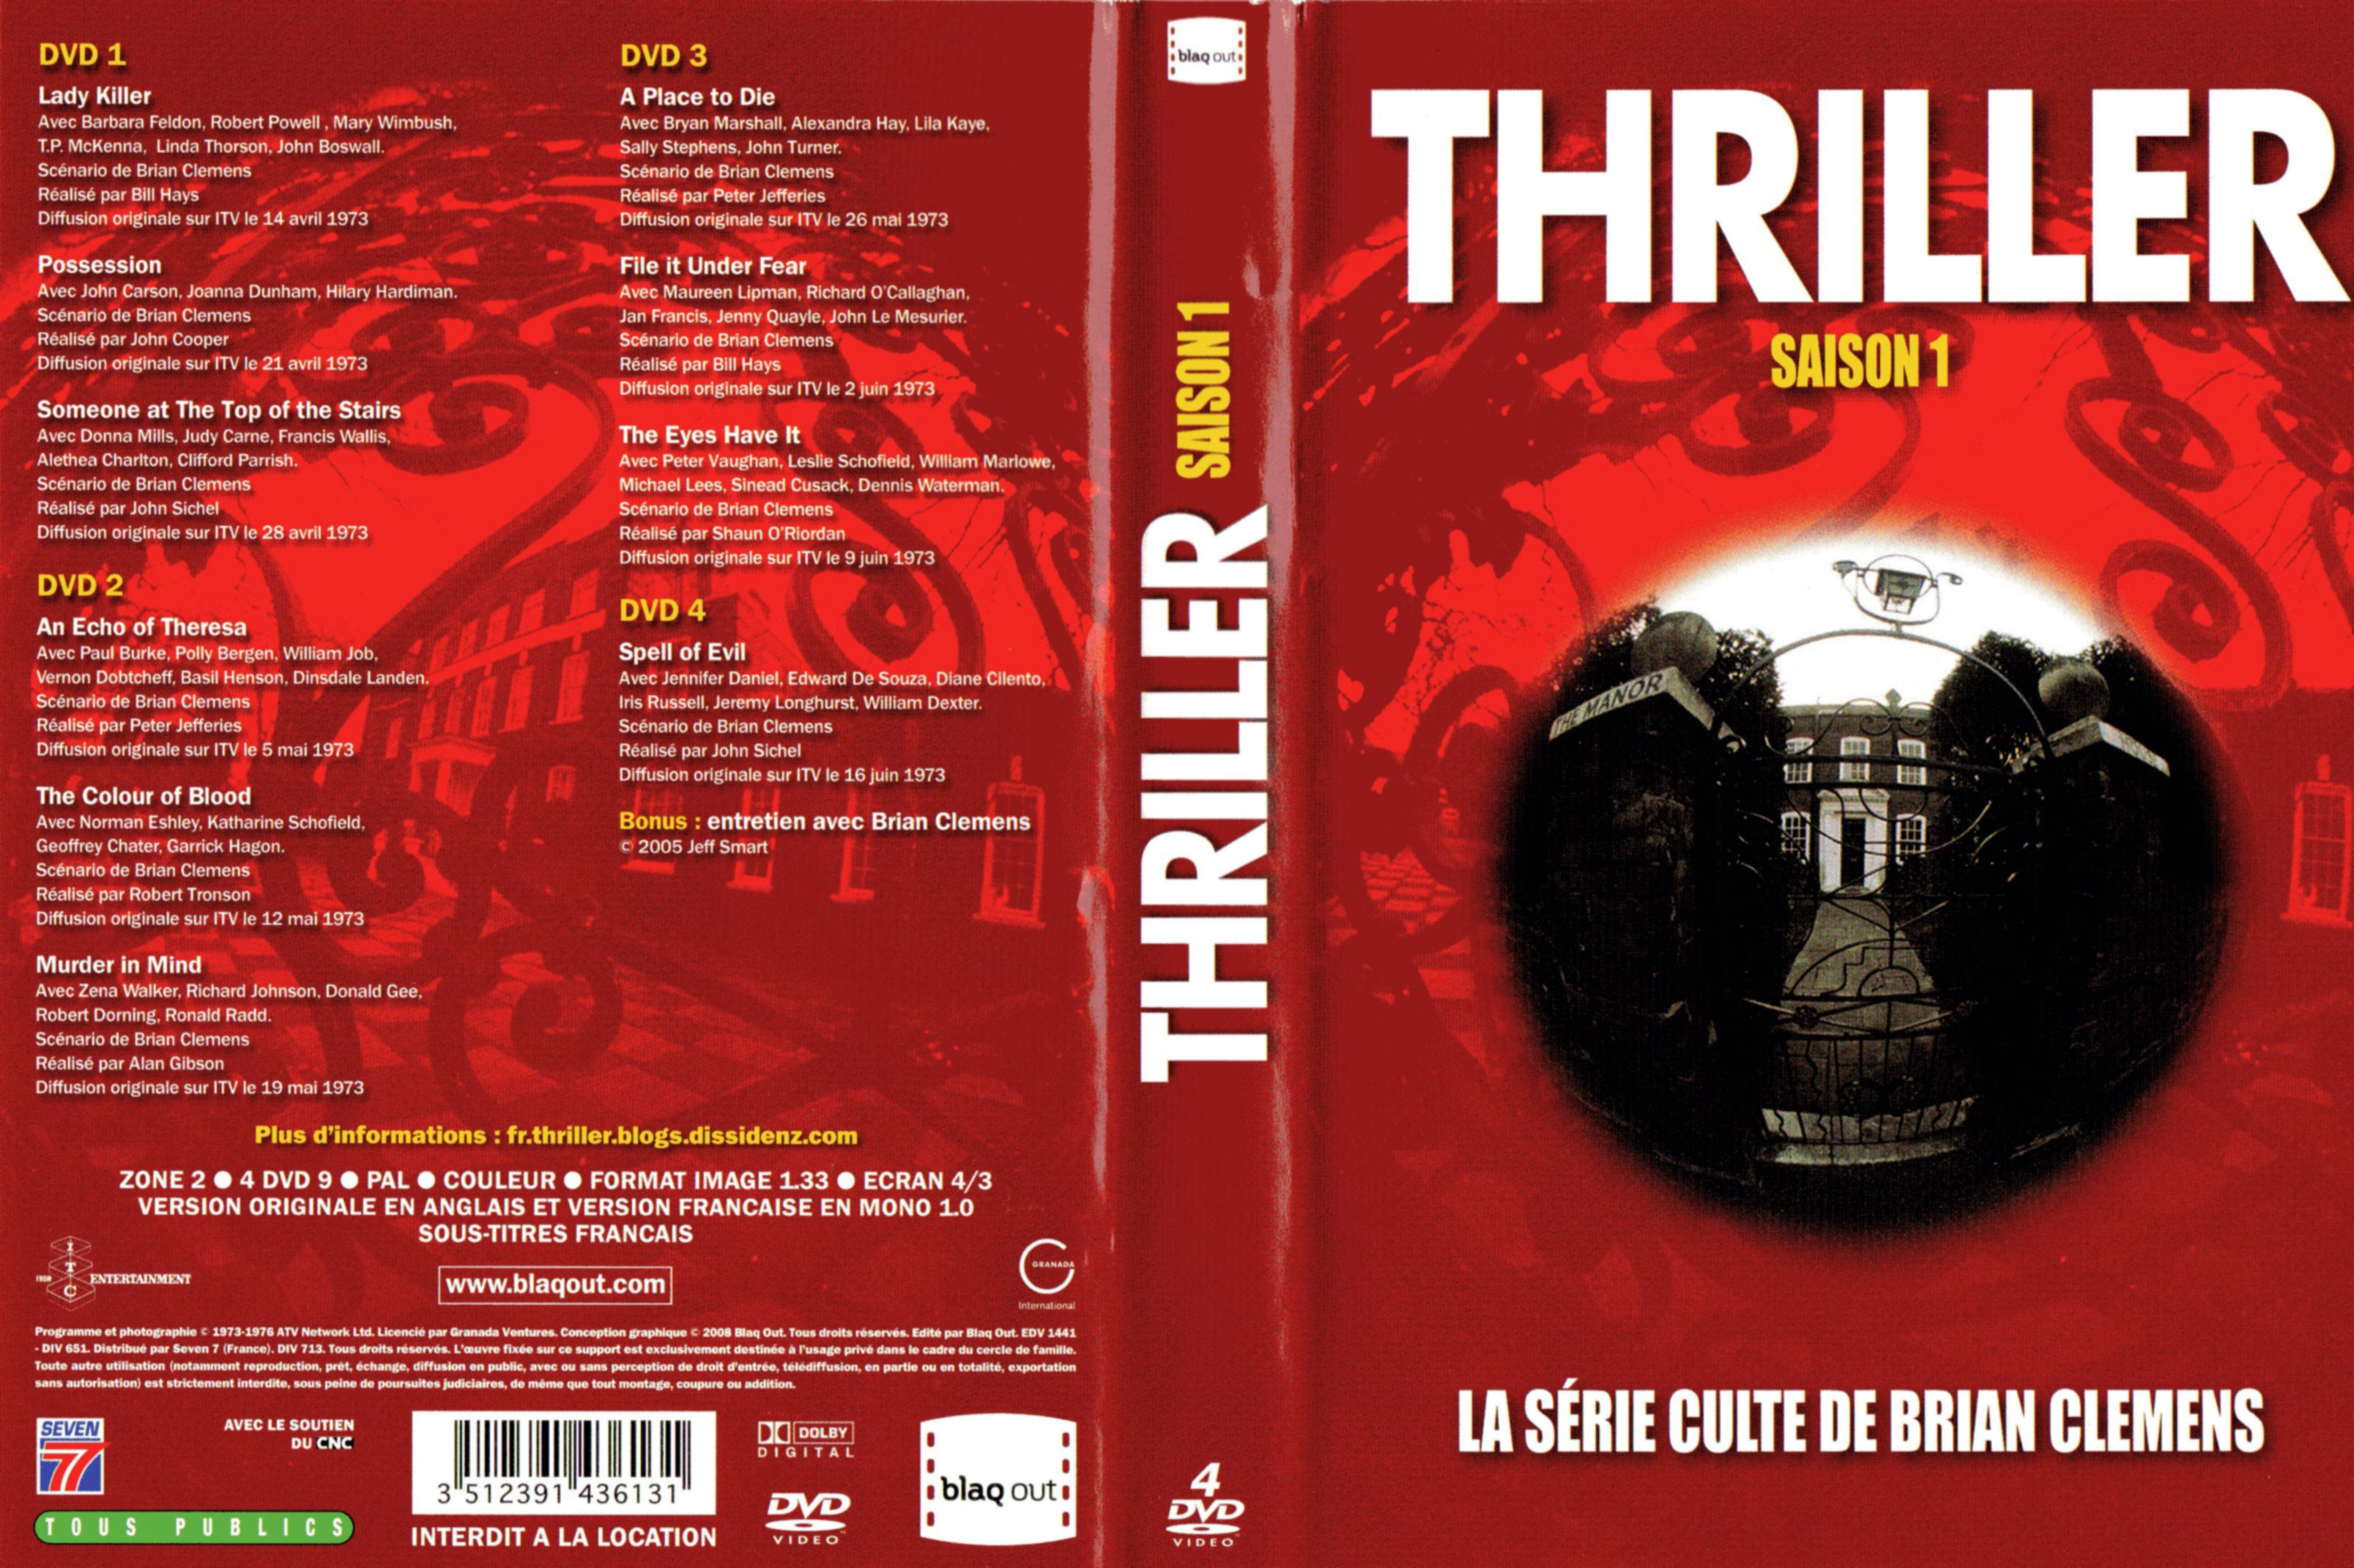 Jaquette DVD Thriller Saison 1